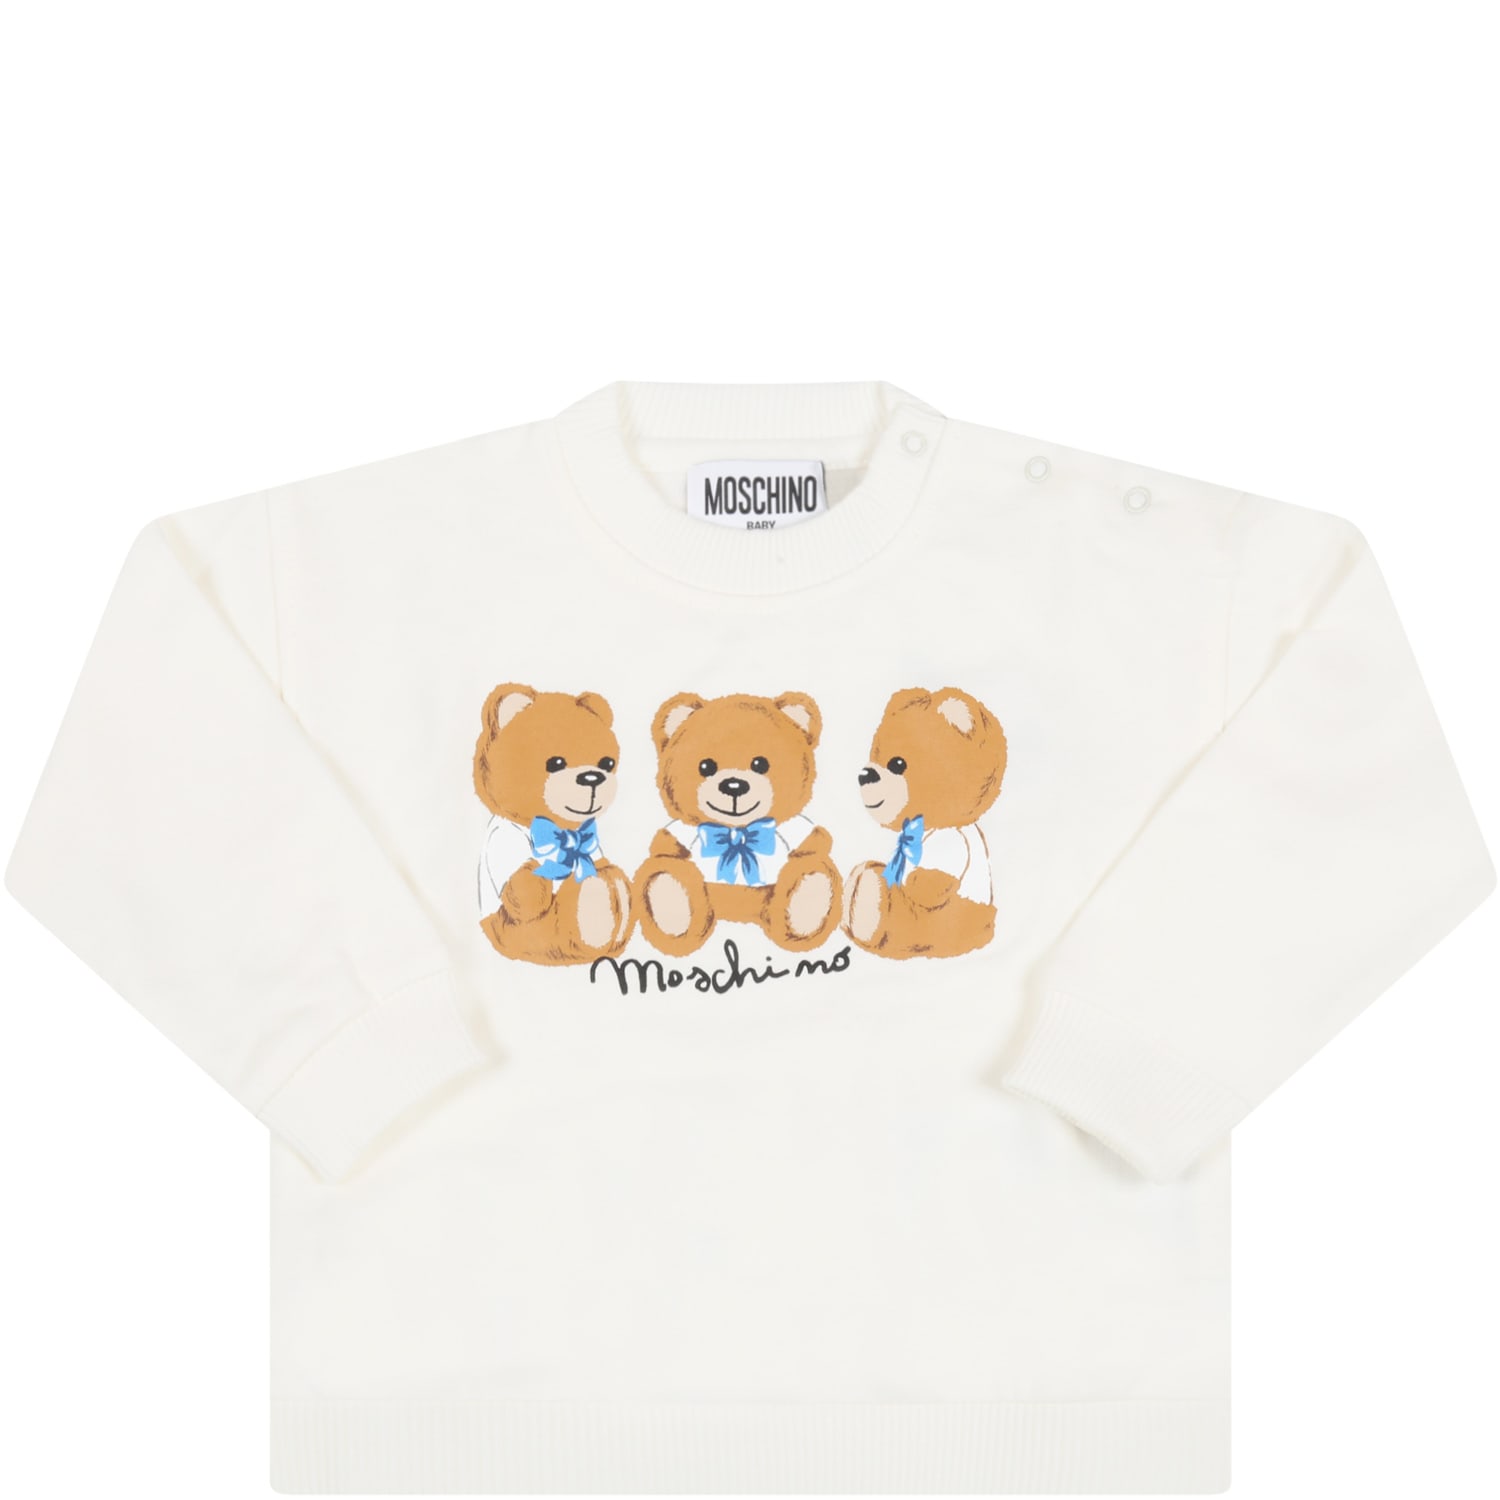 Moschino Ivory Sweatshirt For Baby Kids With Teddy Bears